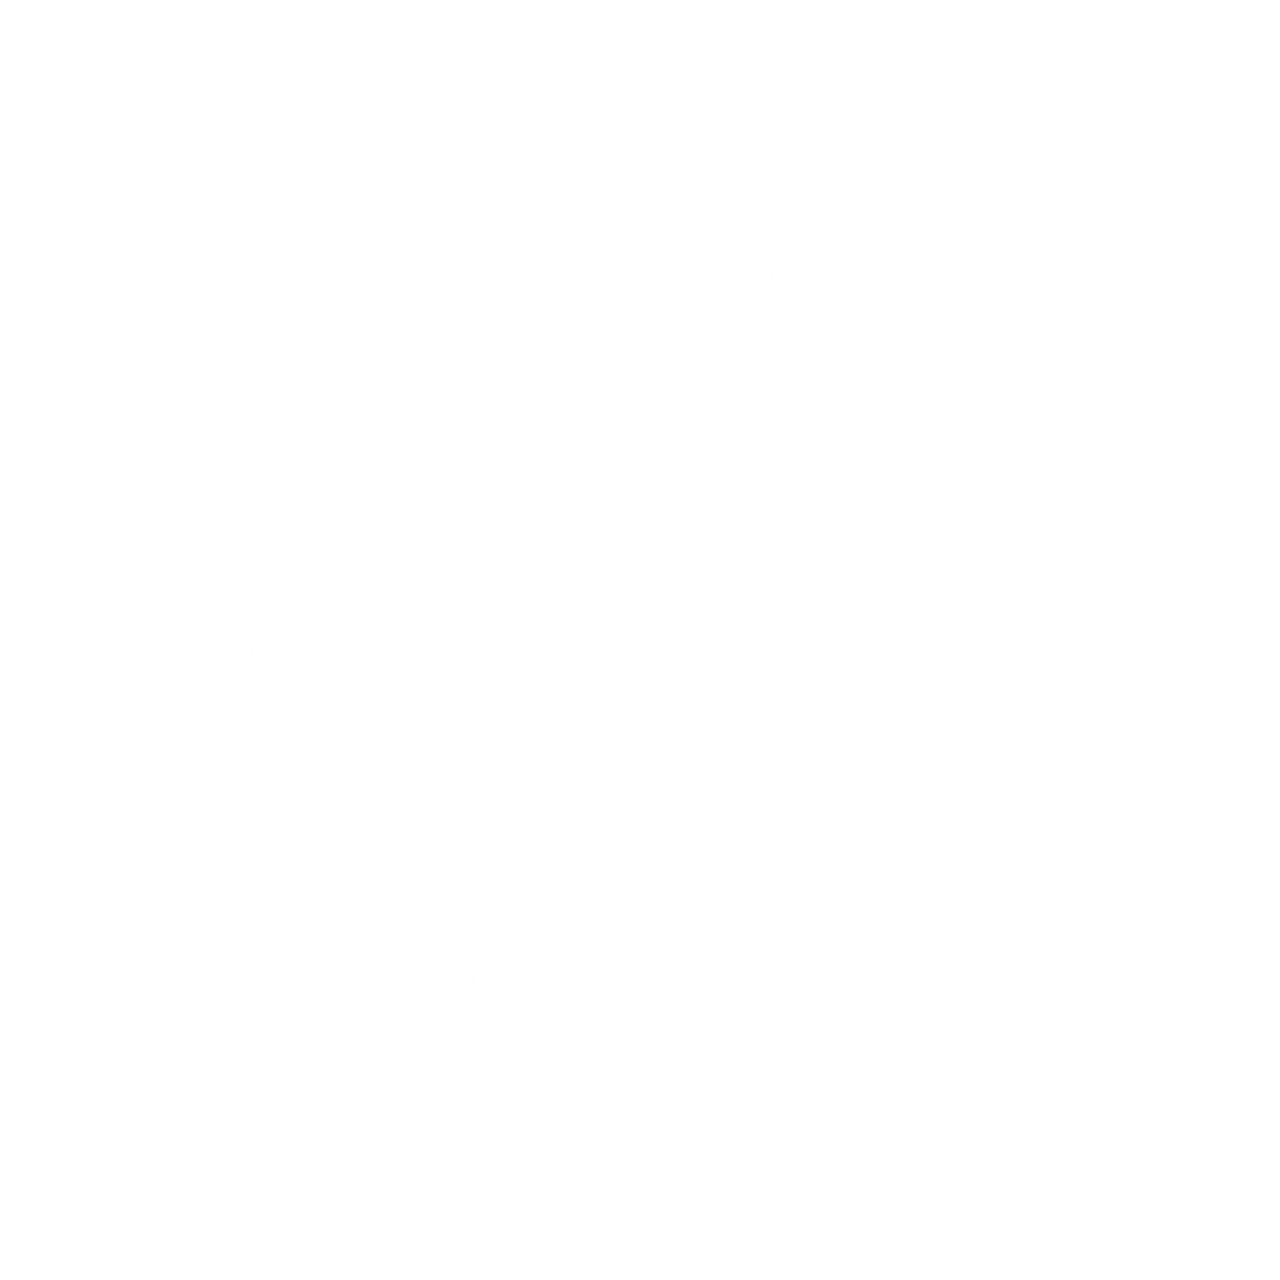 CRAFTED KEEPSAKES's logo